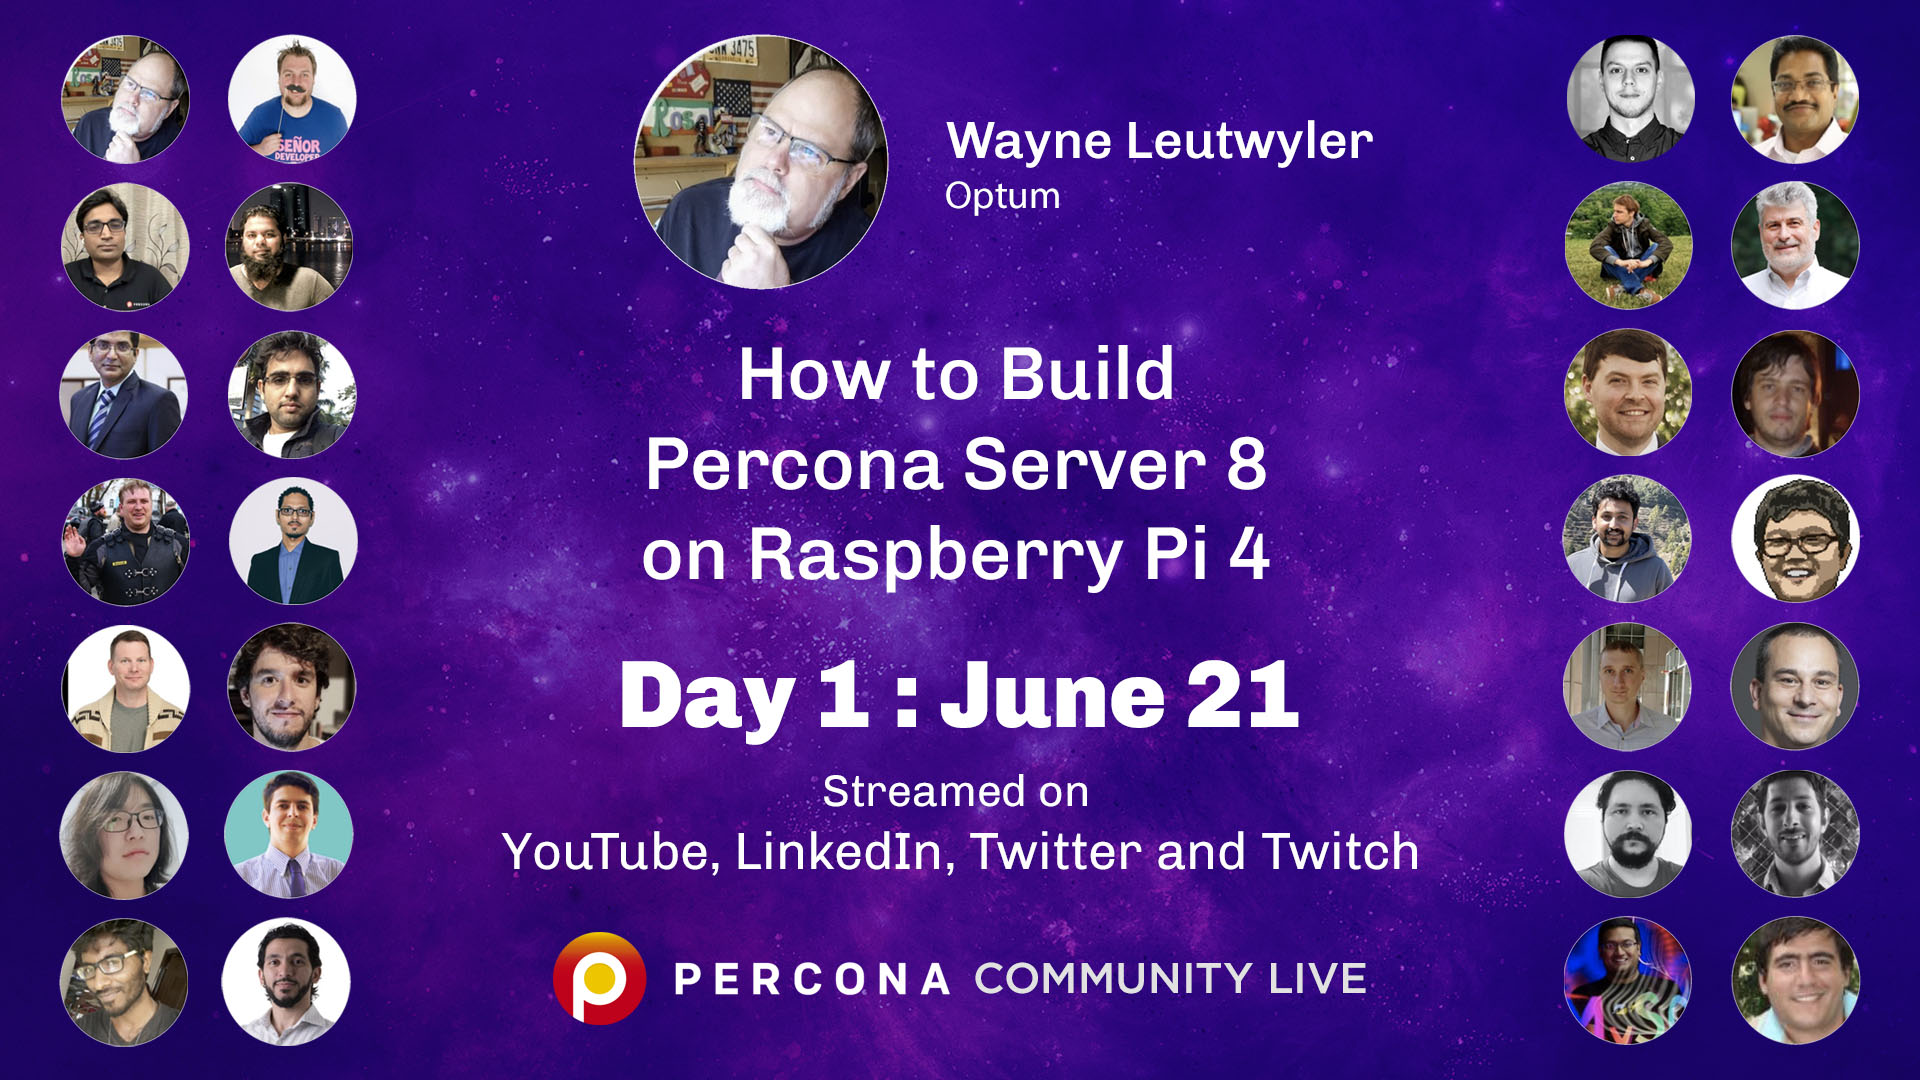 How to Build Percona Server 8 on Raspberry Pi 4